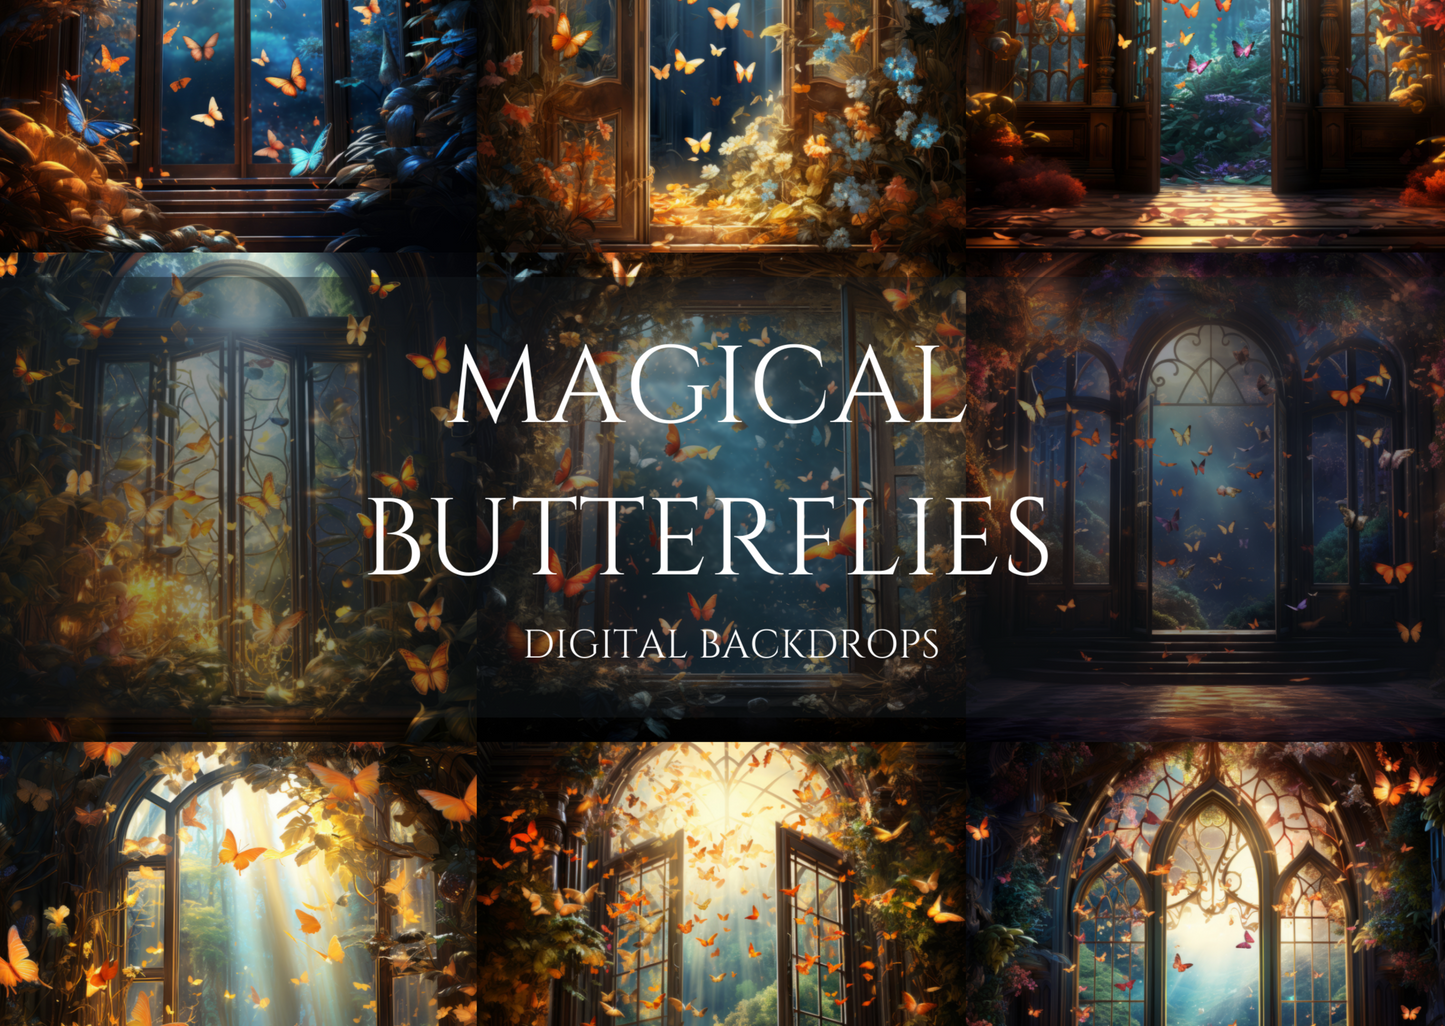 Magical Butterflies Digital Backdrops